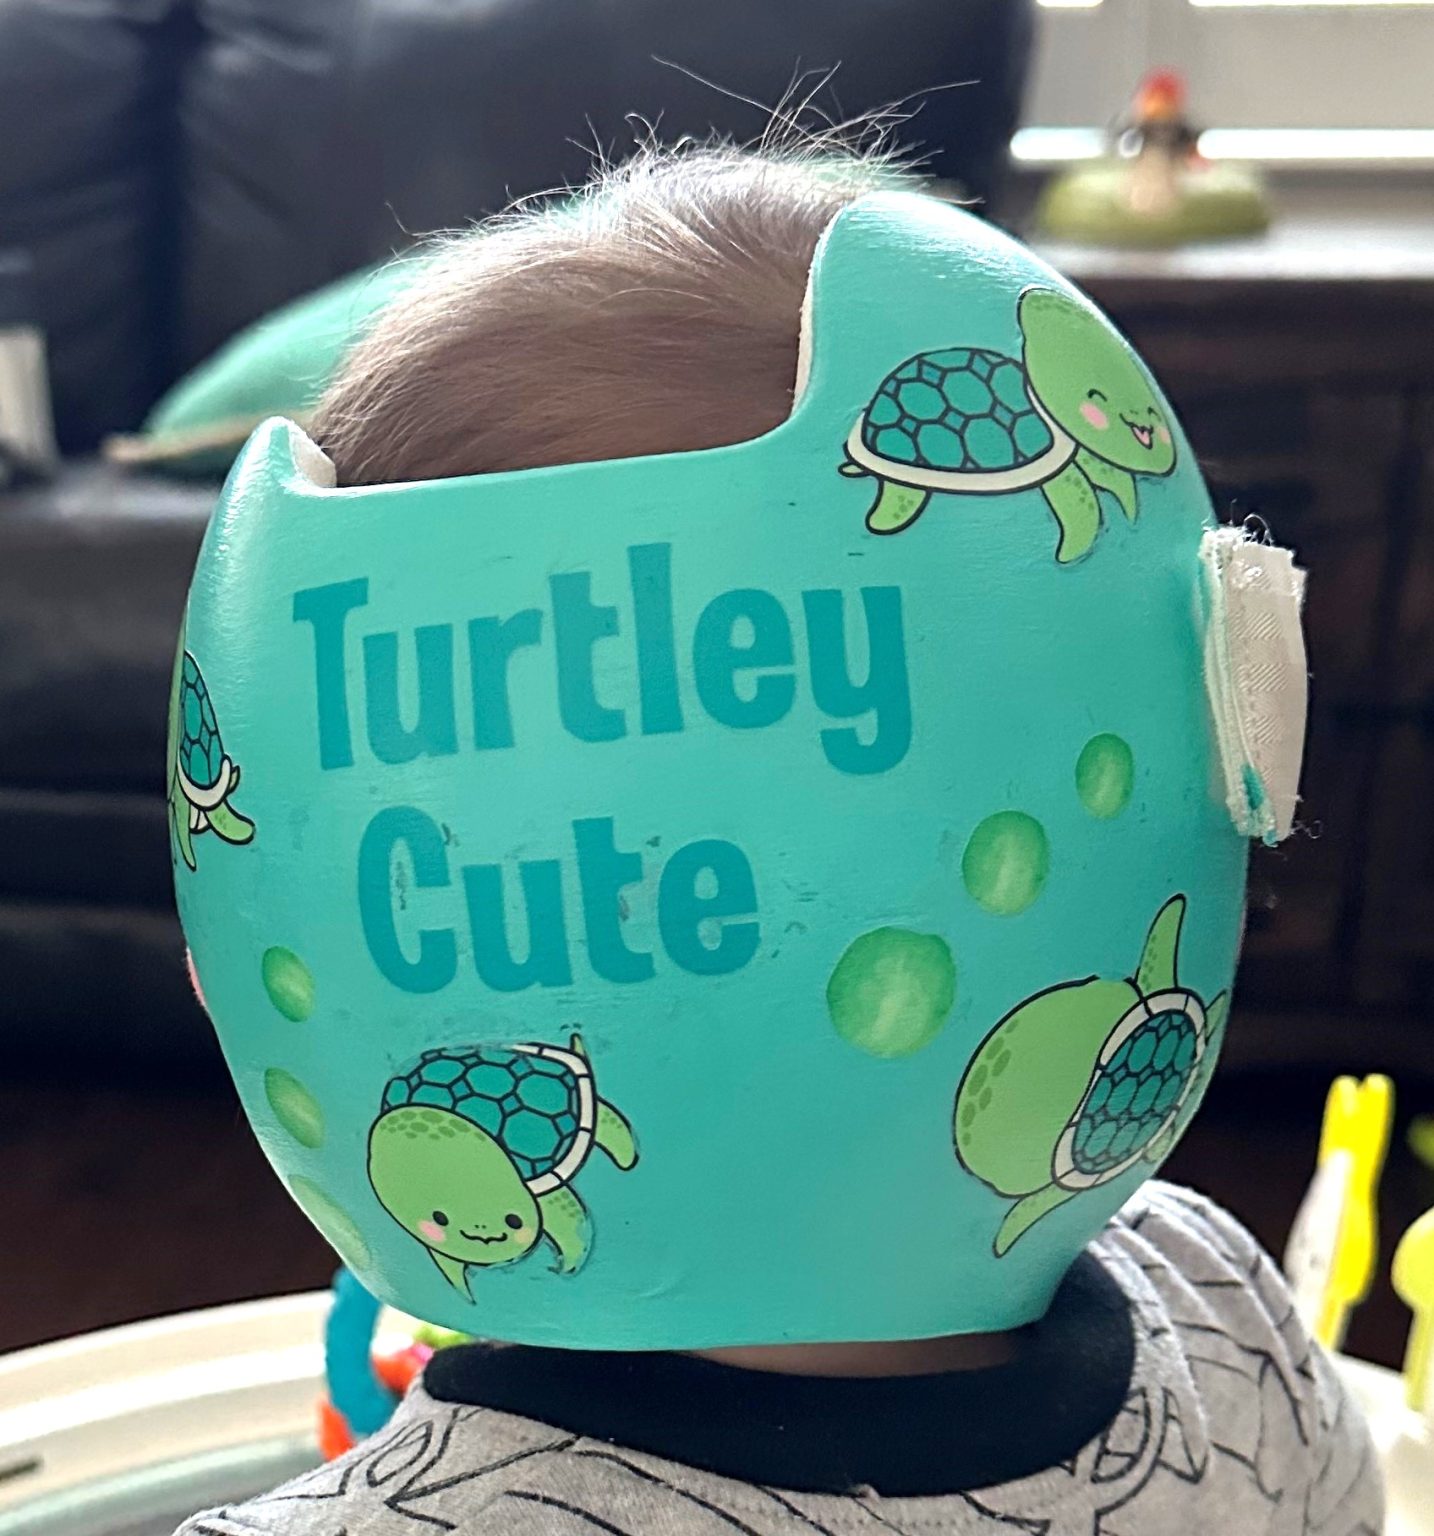 Turtley Cute cranial band decoration